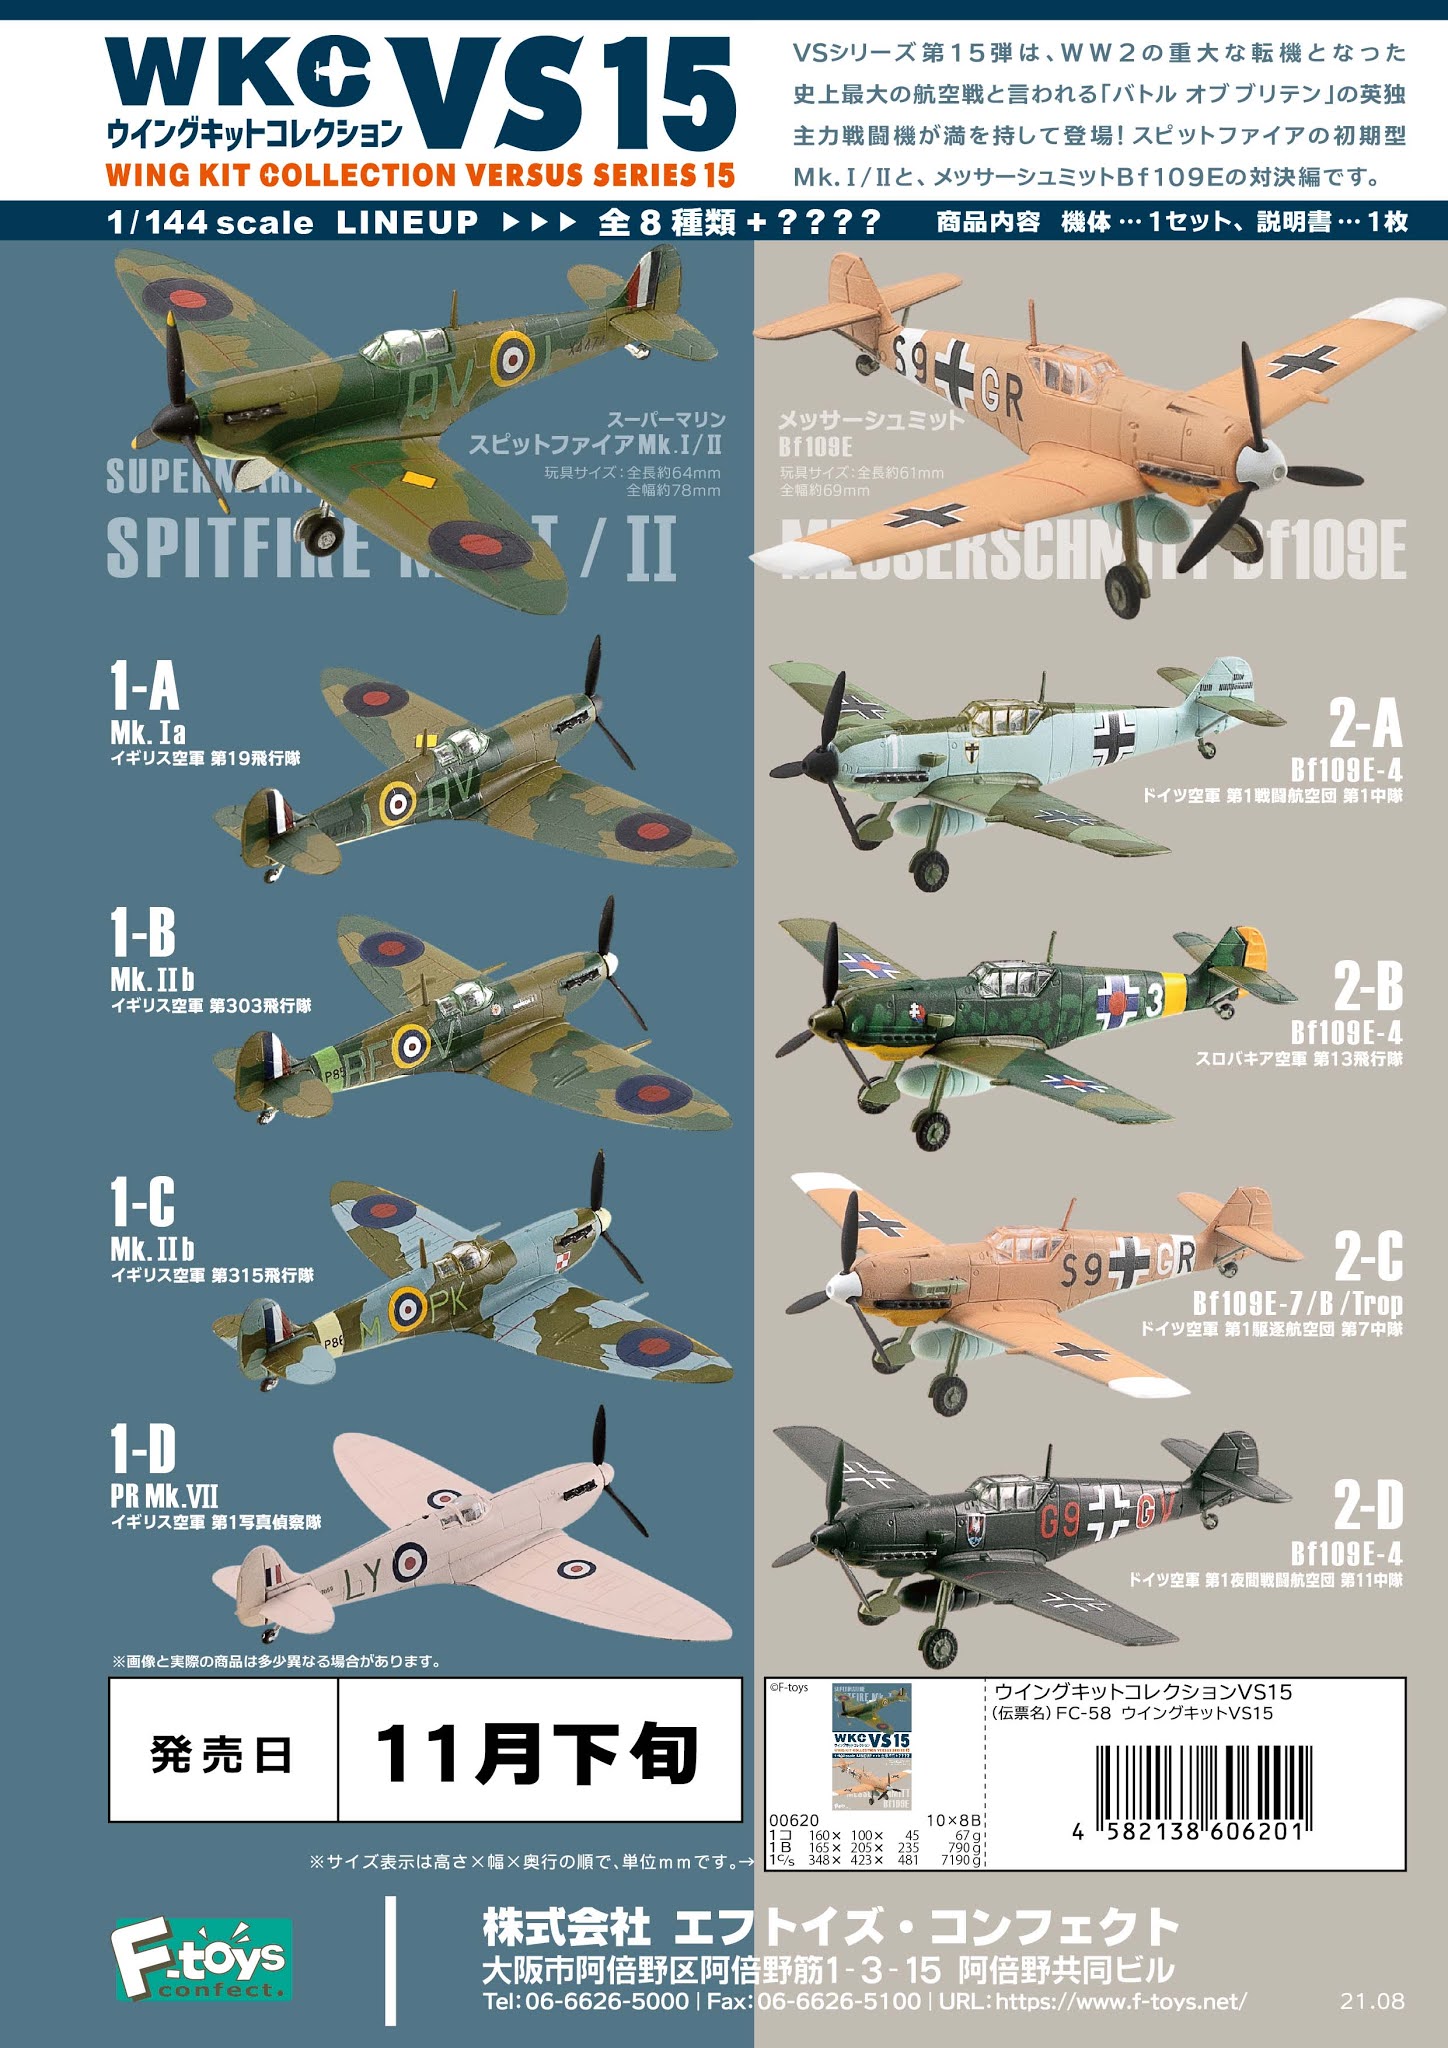 Ki-43-II фирмы f-Toys набор Wing Kit collection Vol.4.